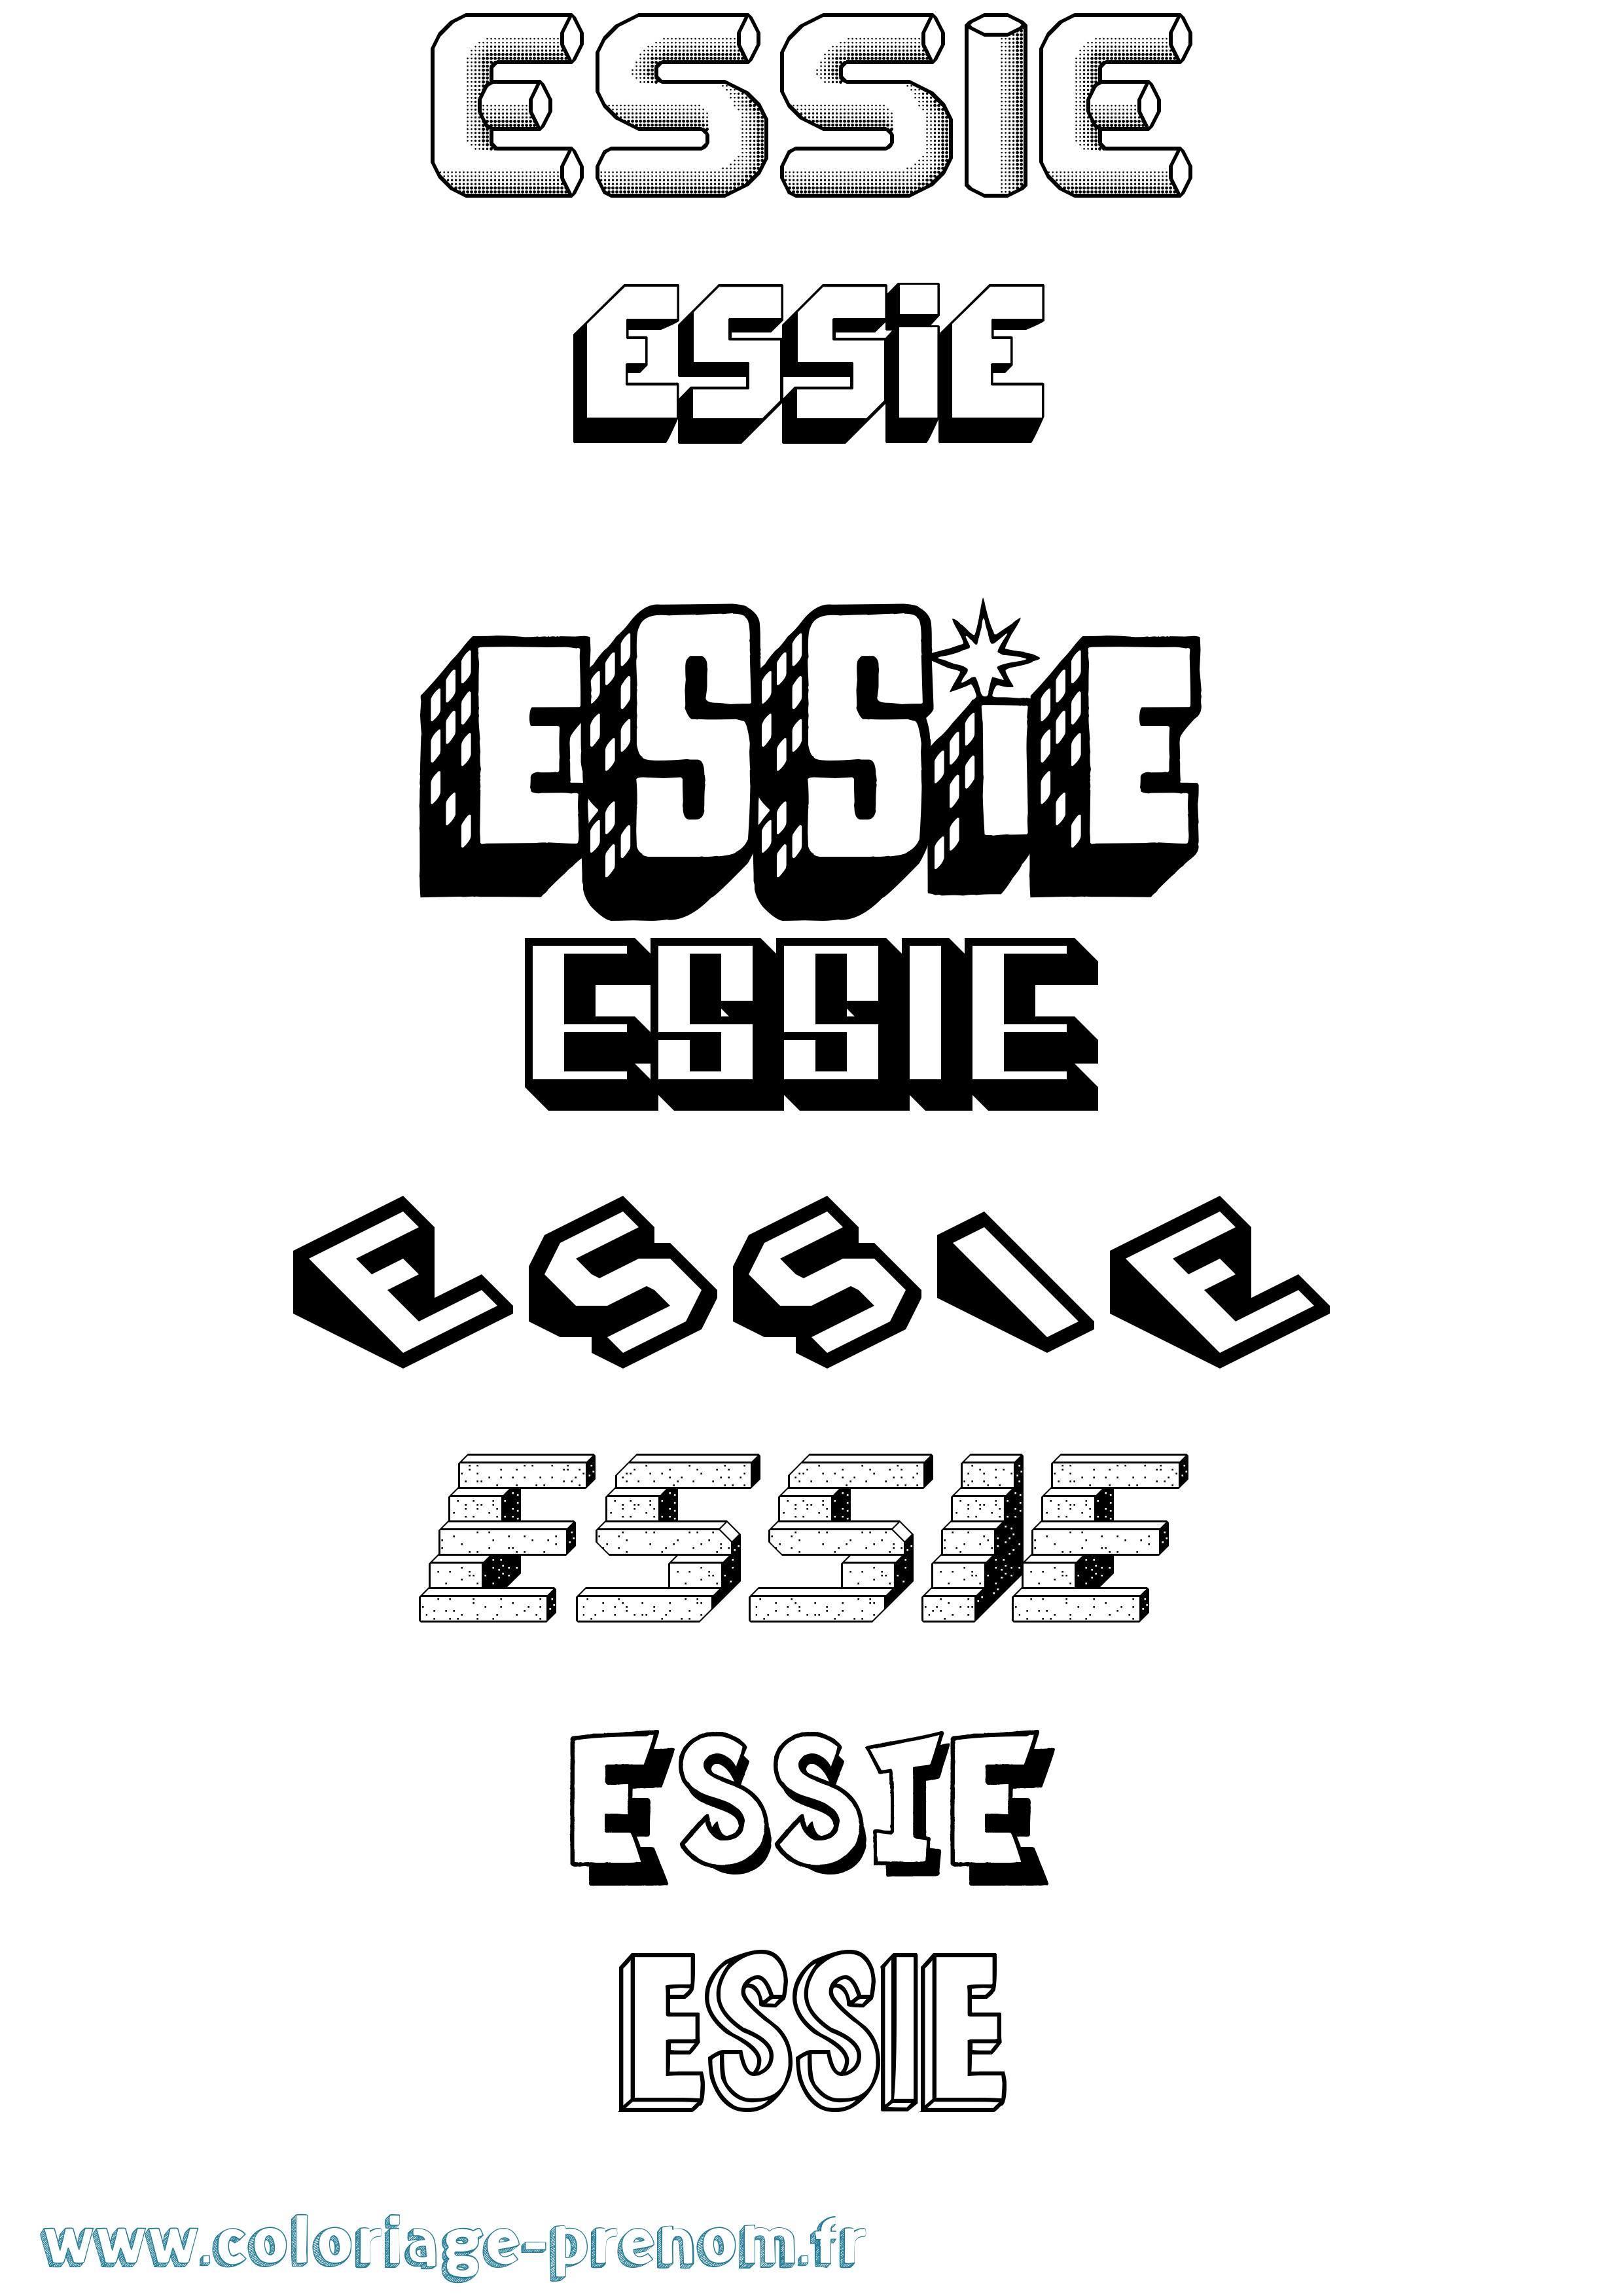 Coloriage prénom Essie Effet 3D